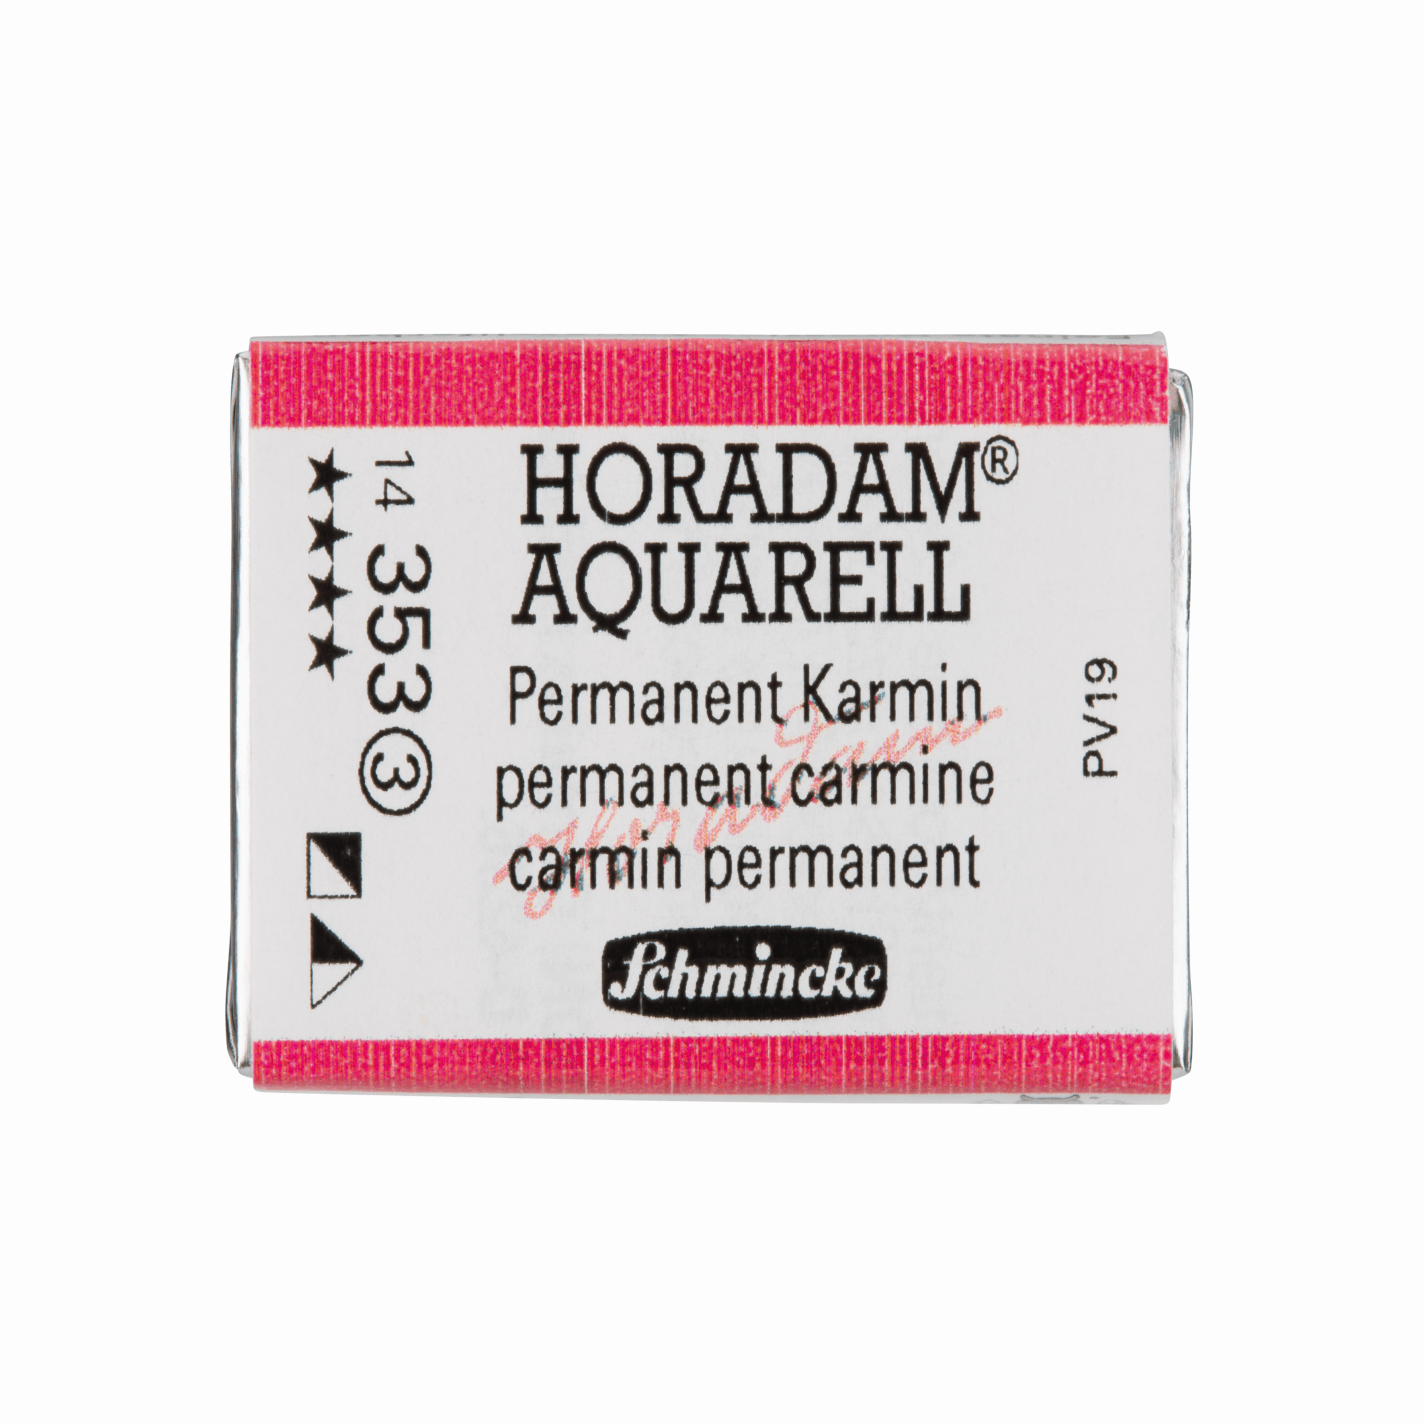 Schmincke Horadam Aquarell pans 1/1 pan Permanent Carmine